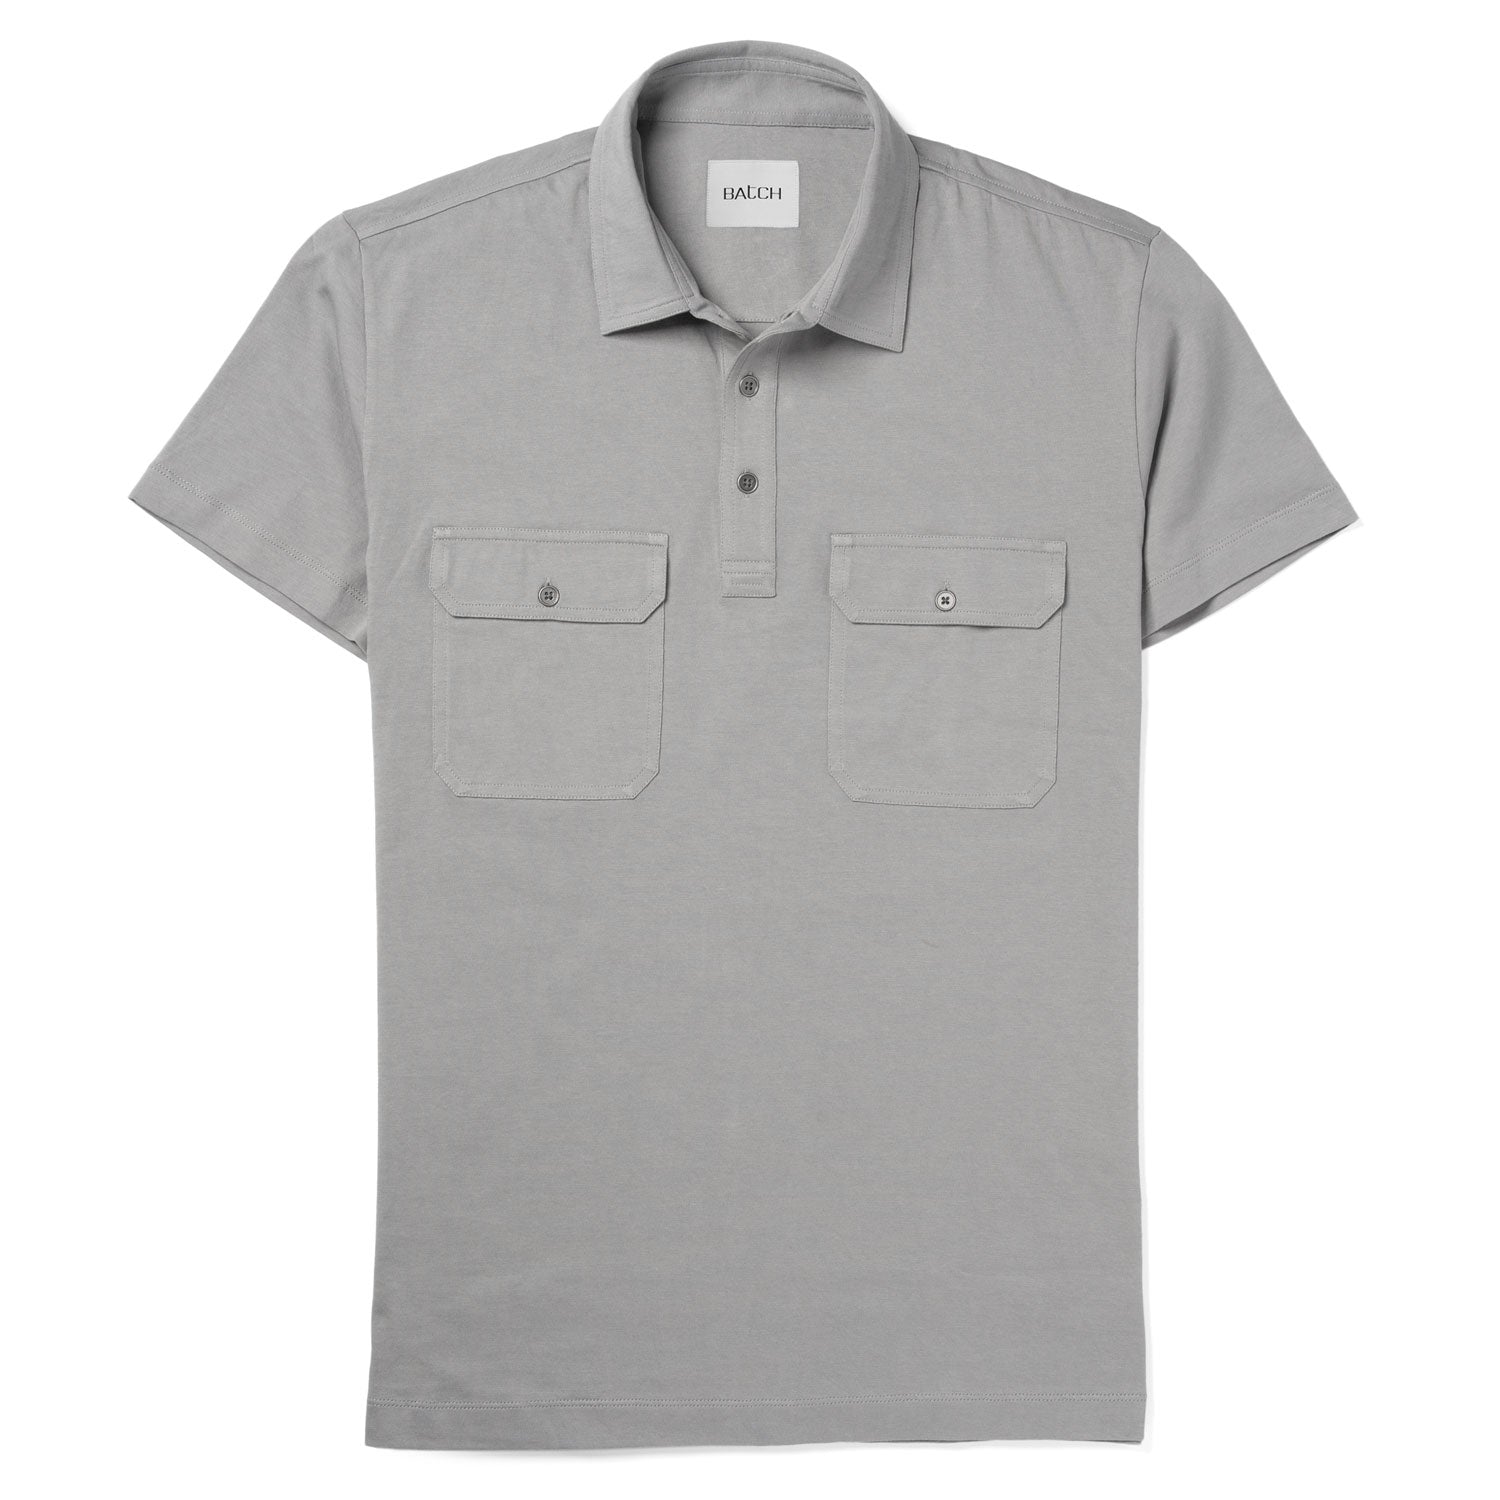 Constructor Short Sleeve Polo Shirt –  Cement Gray Cotton Jersey